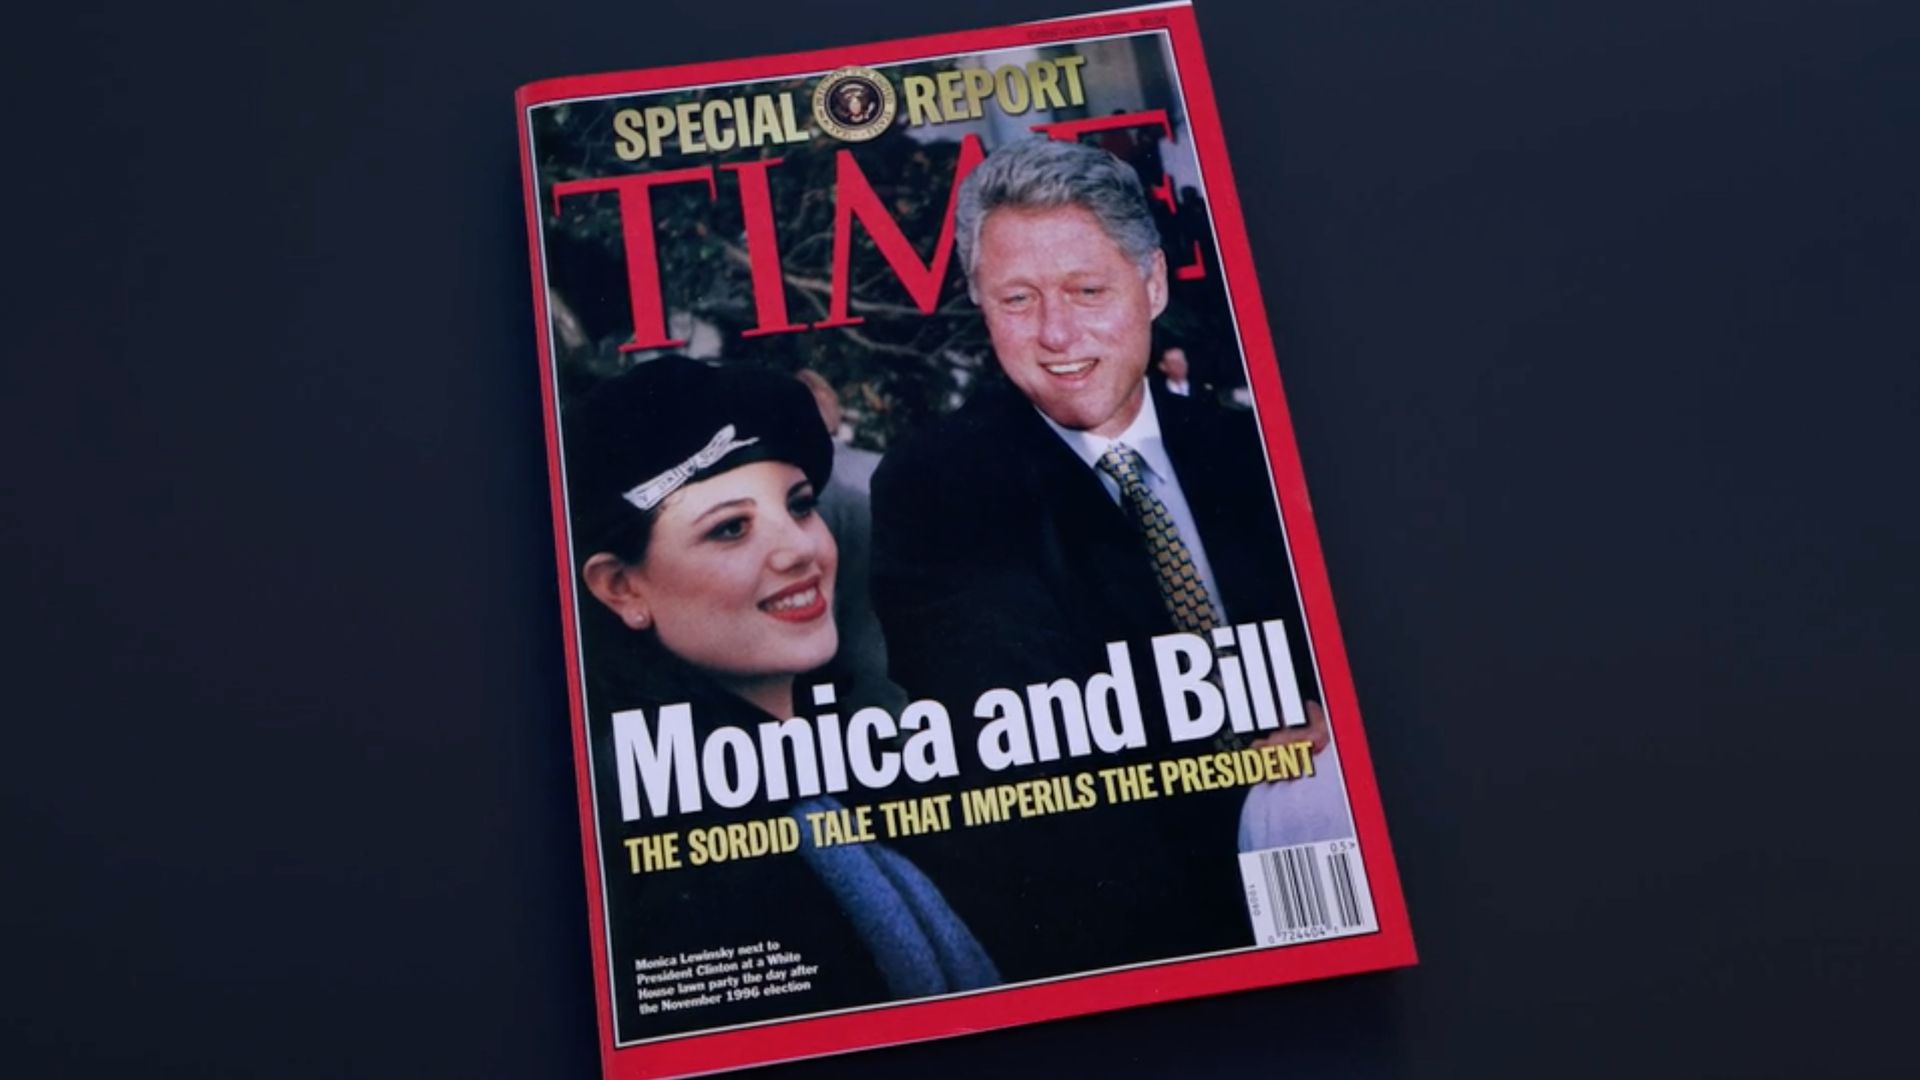 The Clinton Affair background